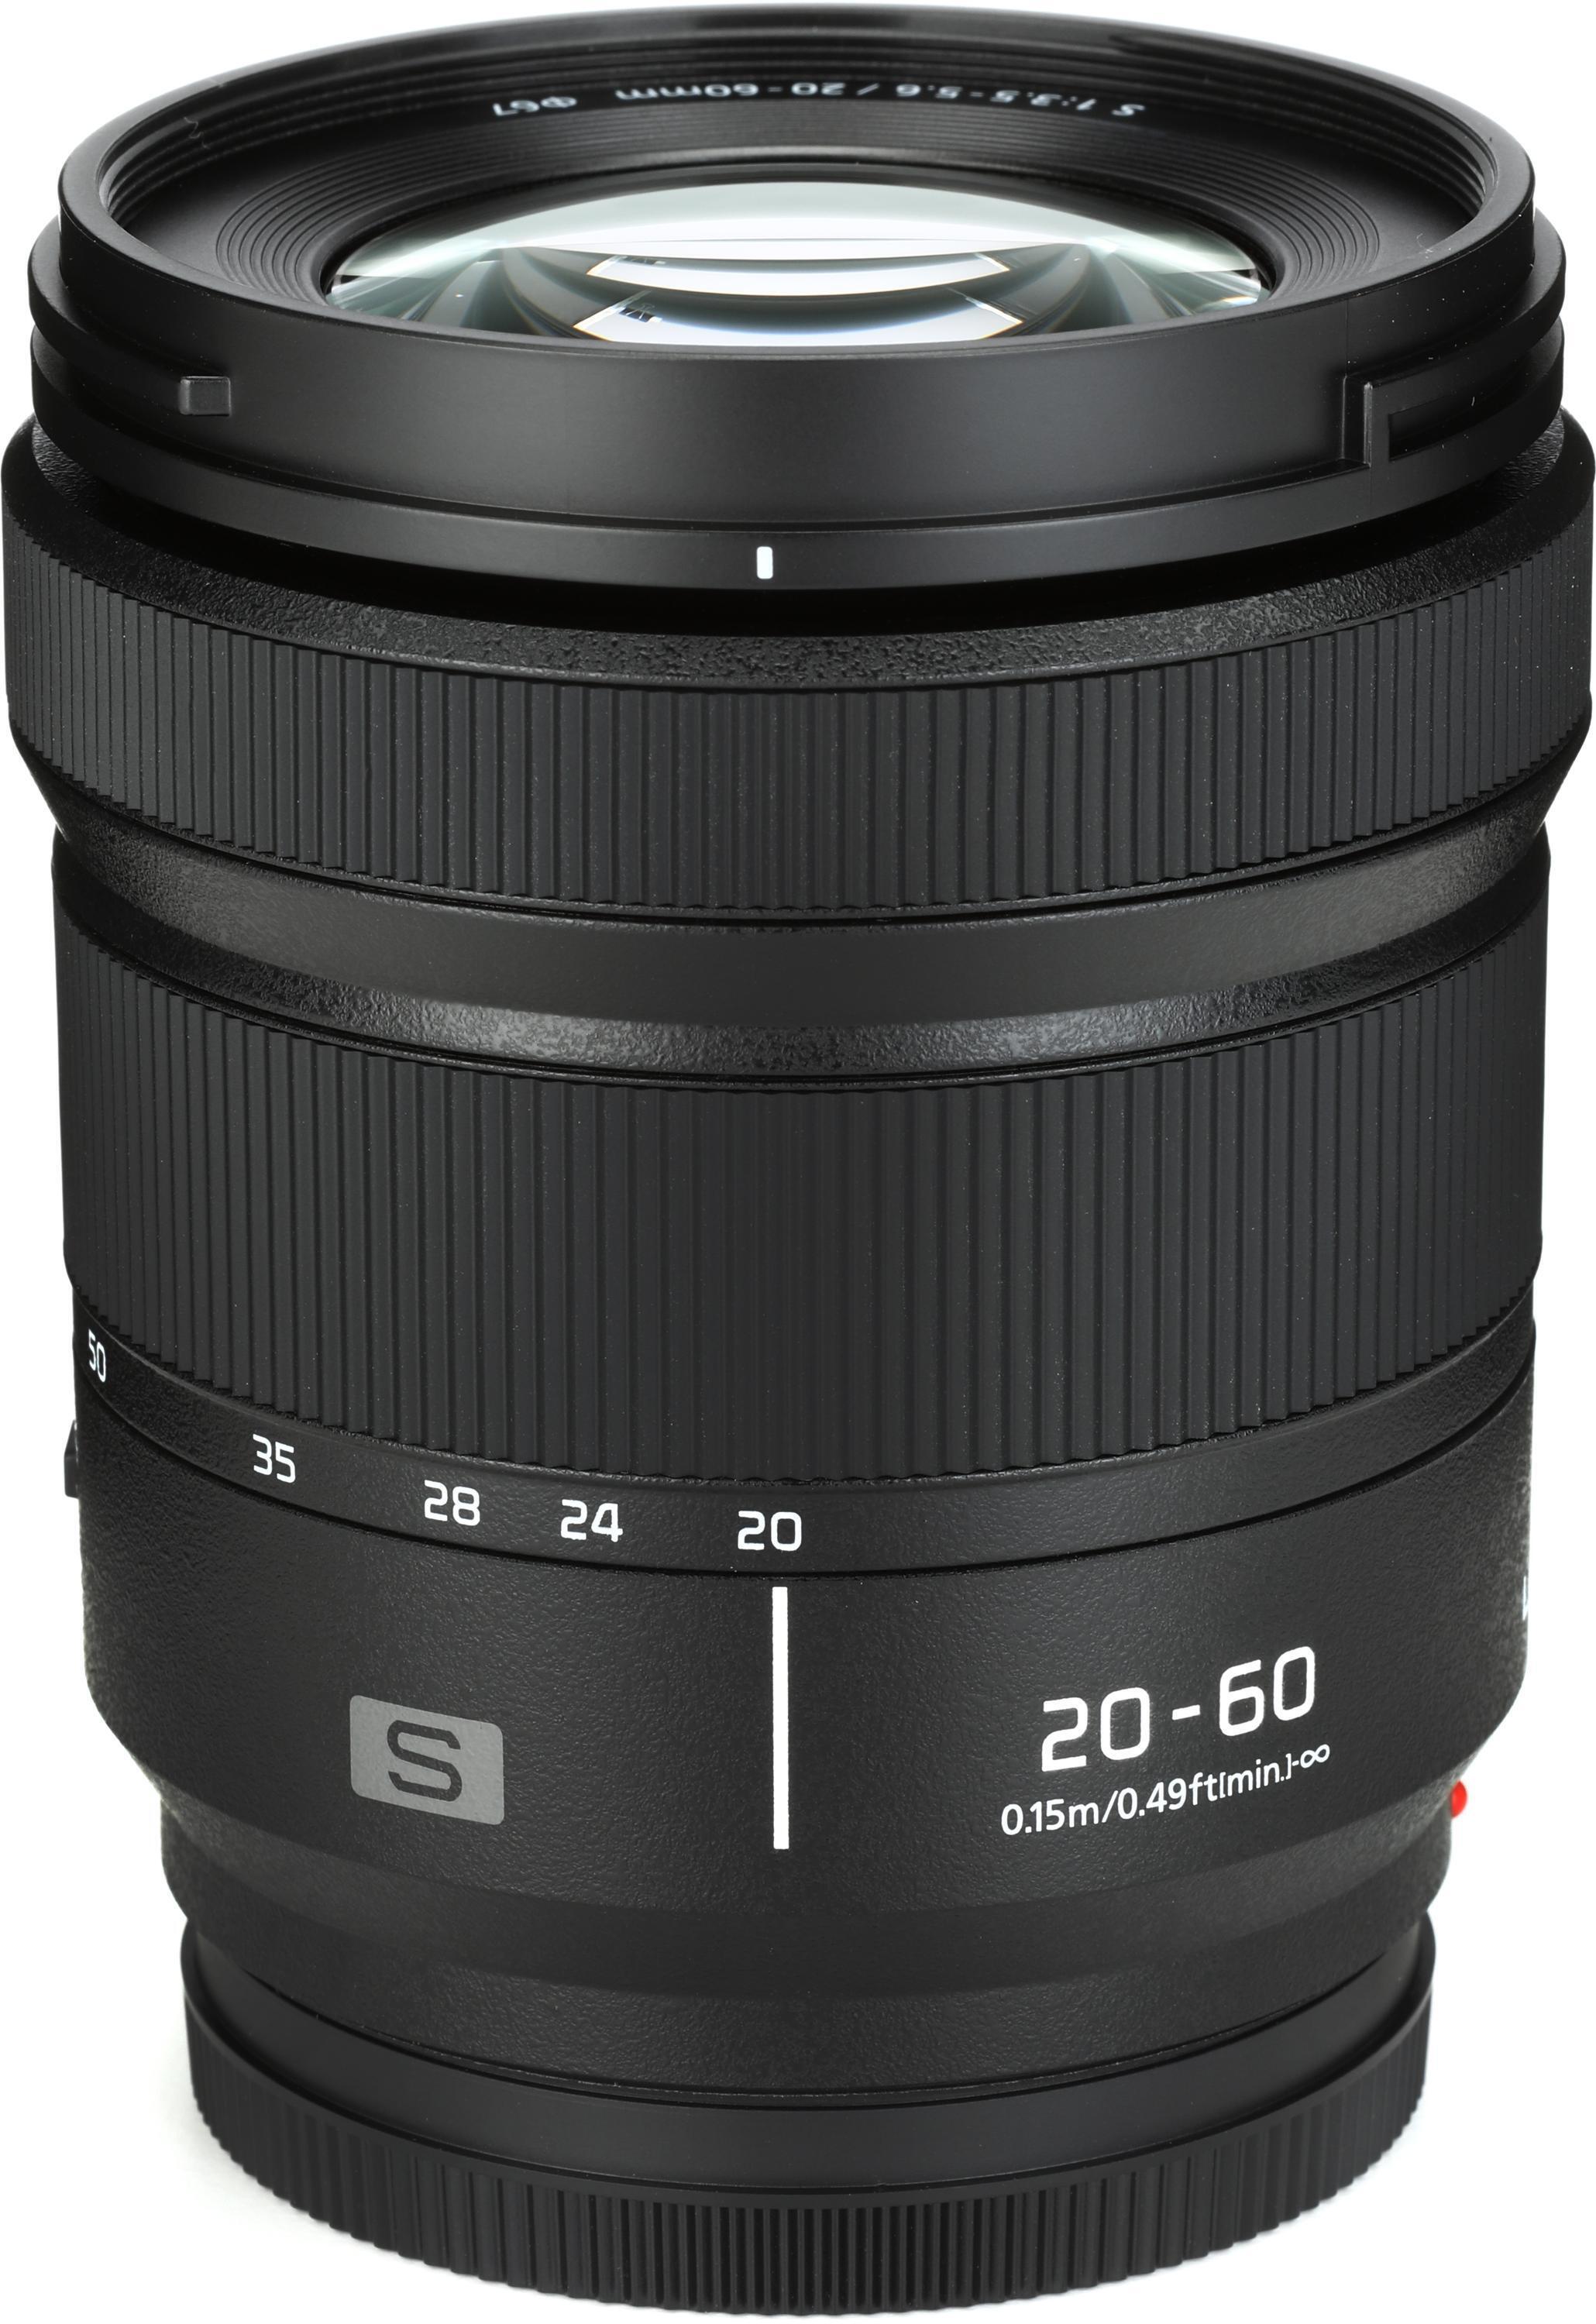 Panasonic S-R2060 Lumix S 20-60mm f/3.5-5.6 Lens